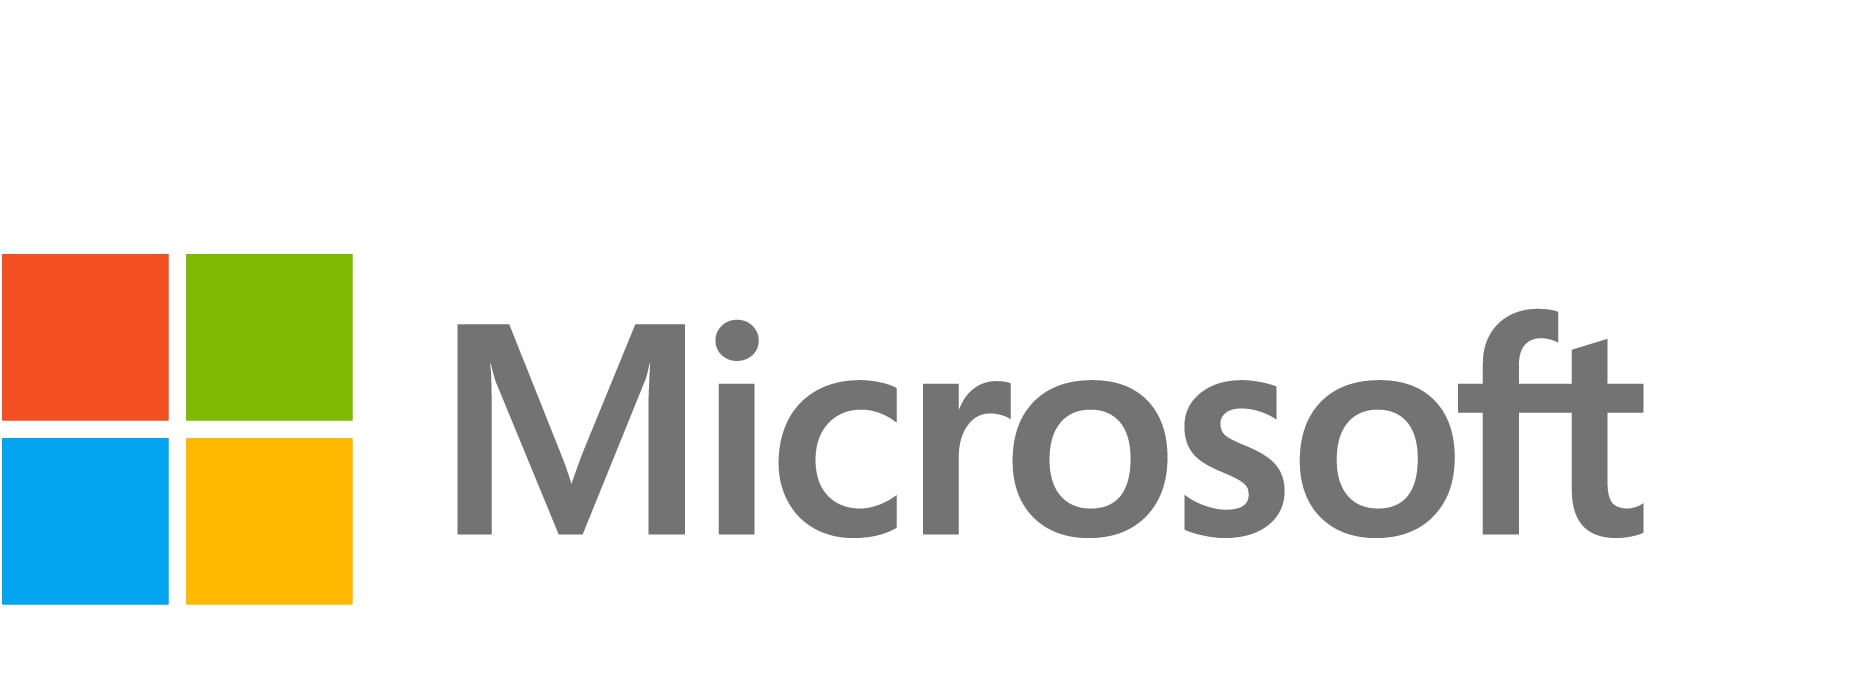 Microsoft Windows Server Datacenter Edition - step-up license & software assurance - 2 processors